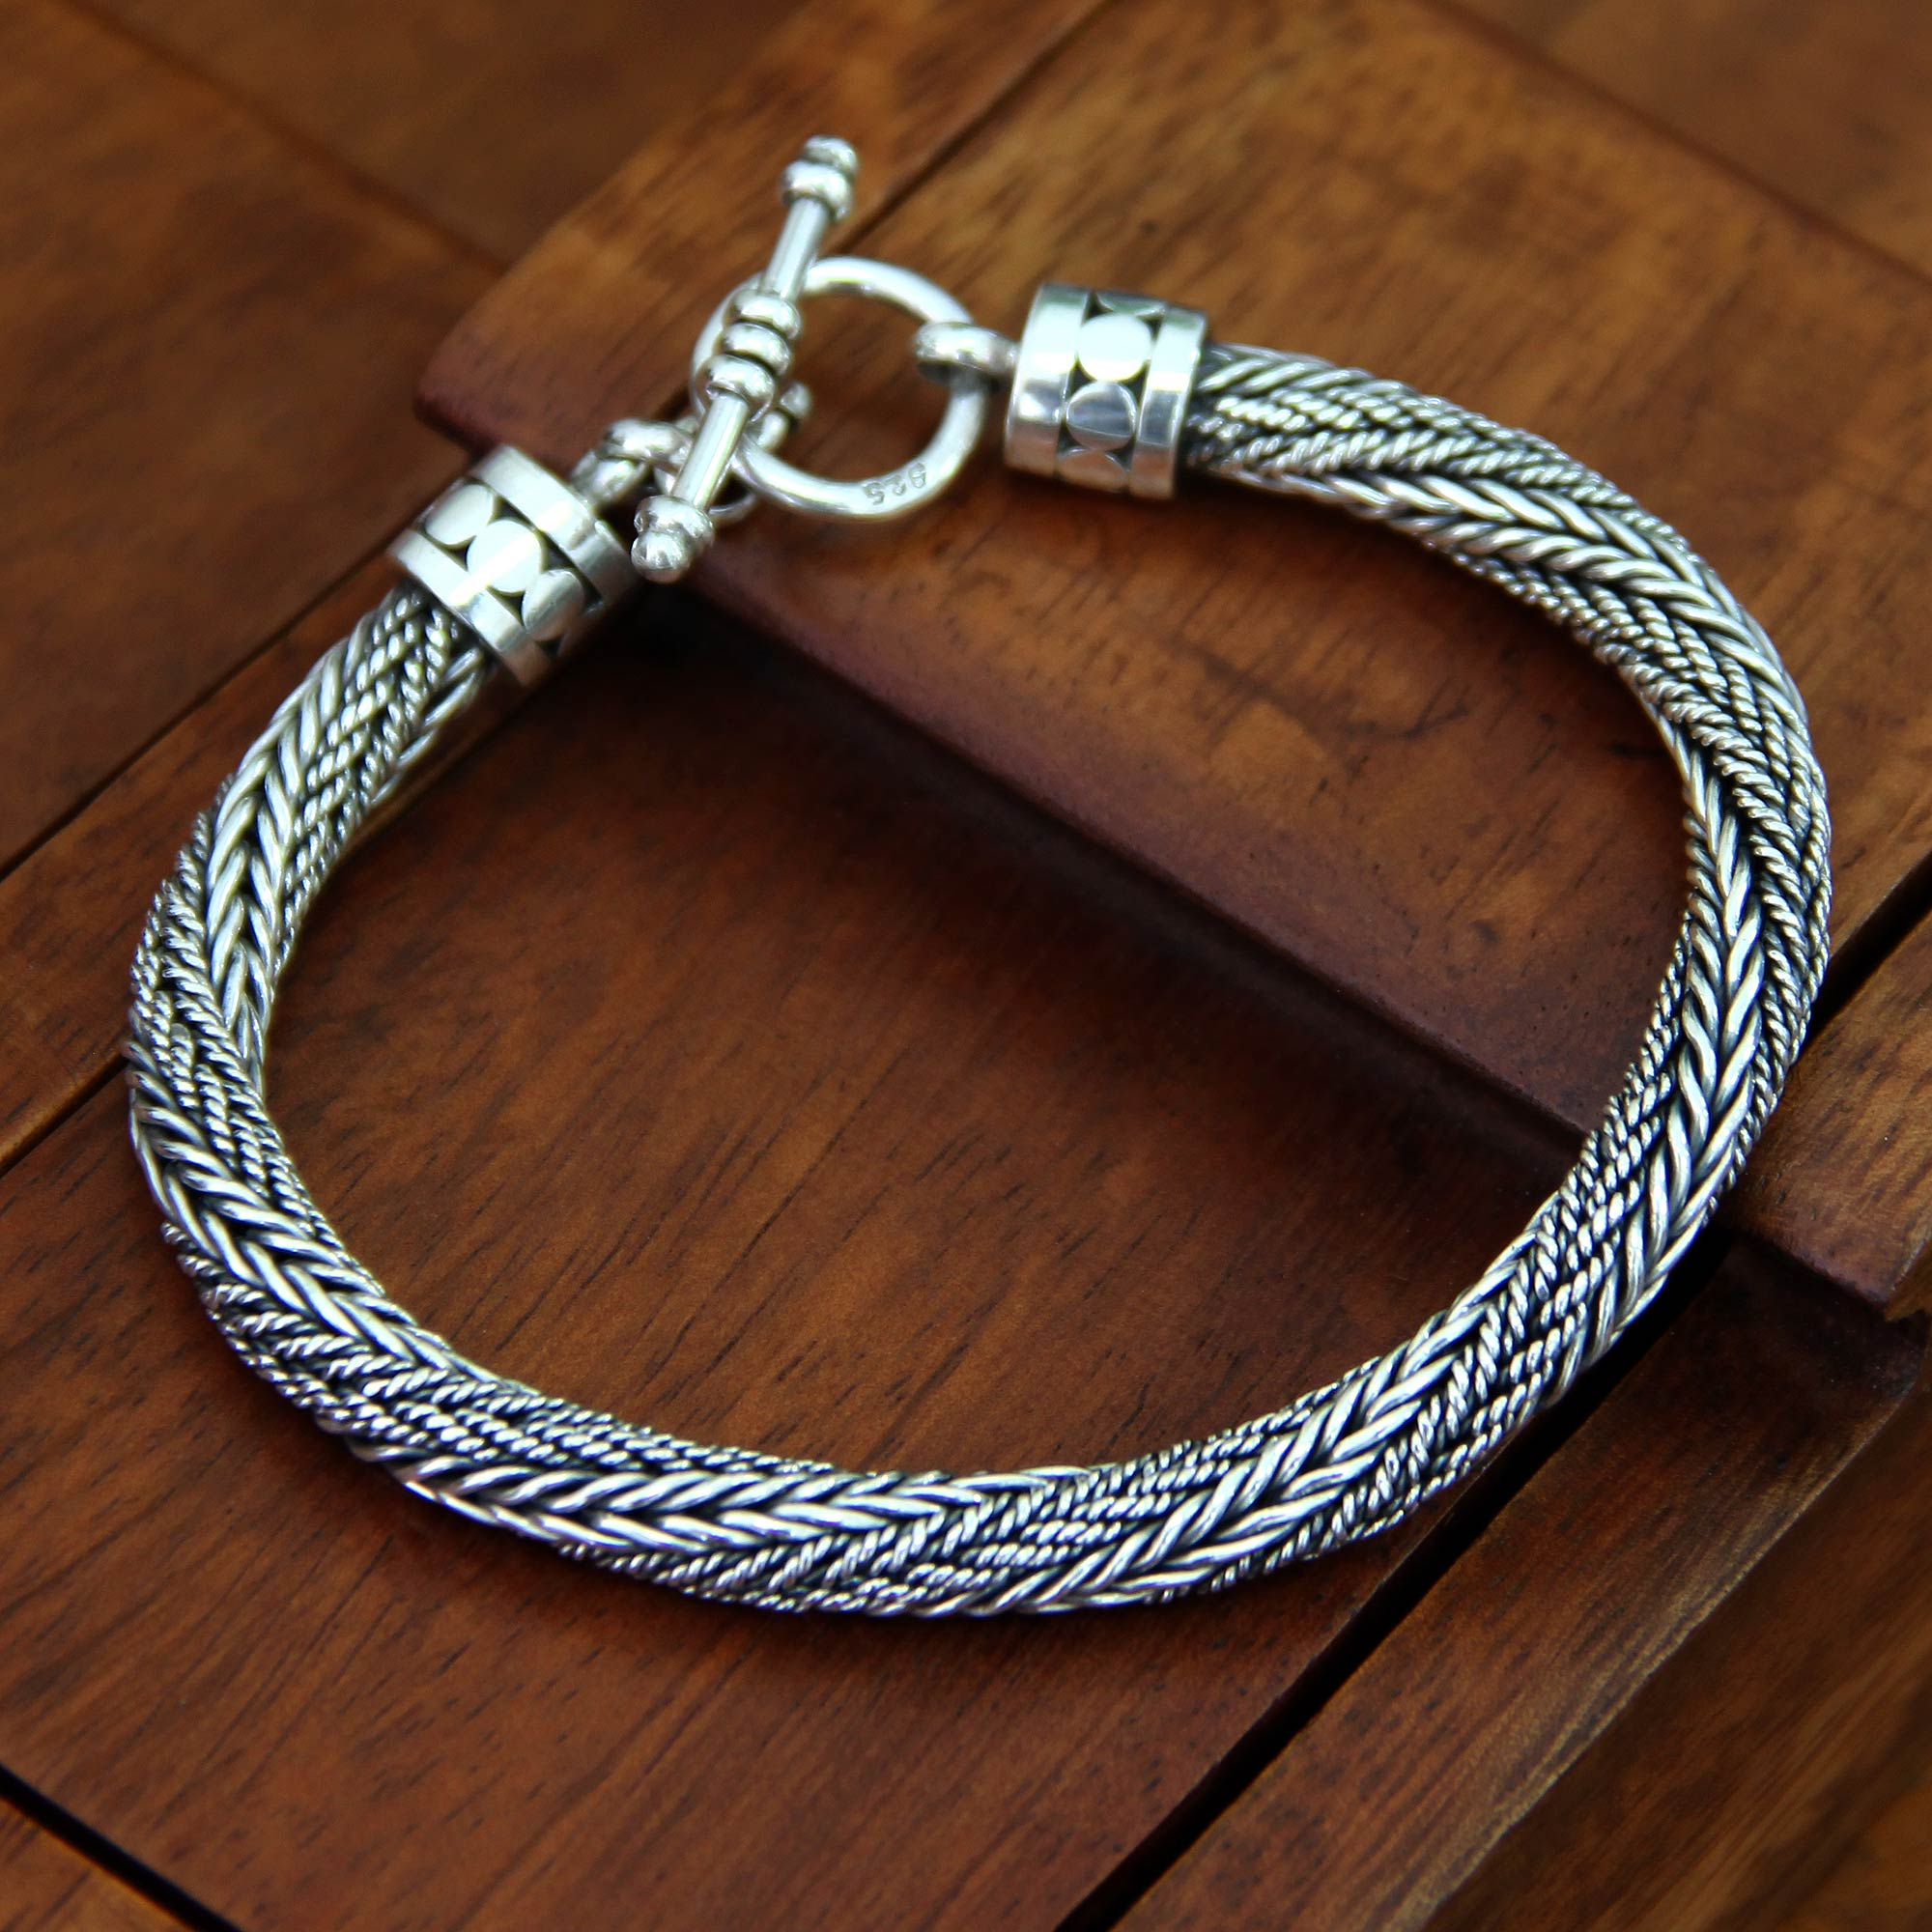 Men's Handmade Sterling Silver Chain Bracelet - Currents | NOVICA